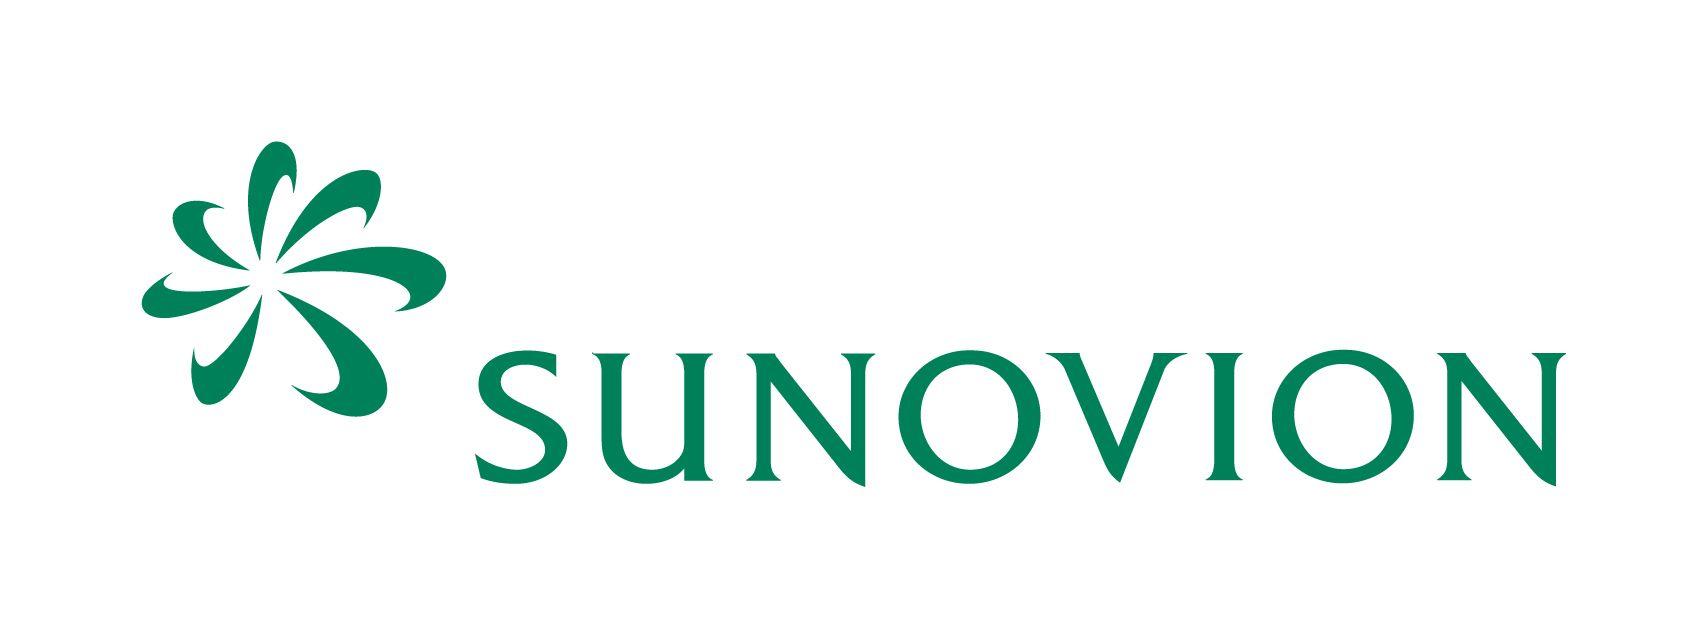 Sunovion Logo - The American College of Chest Physicians and Sunovion Announce